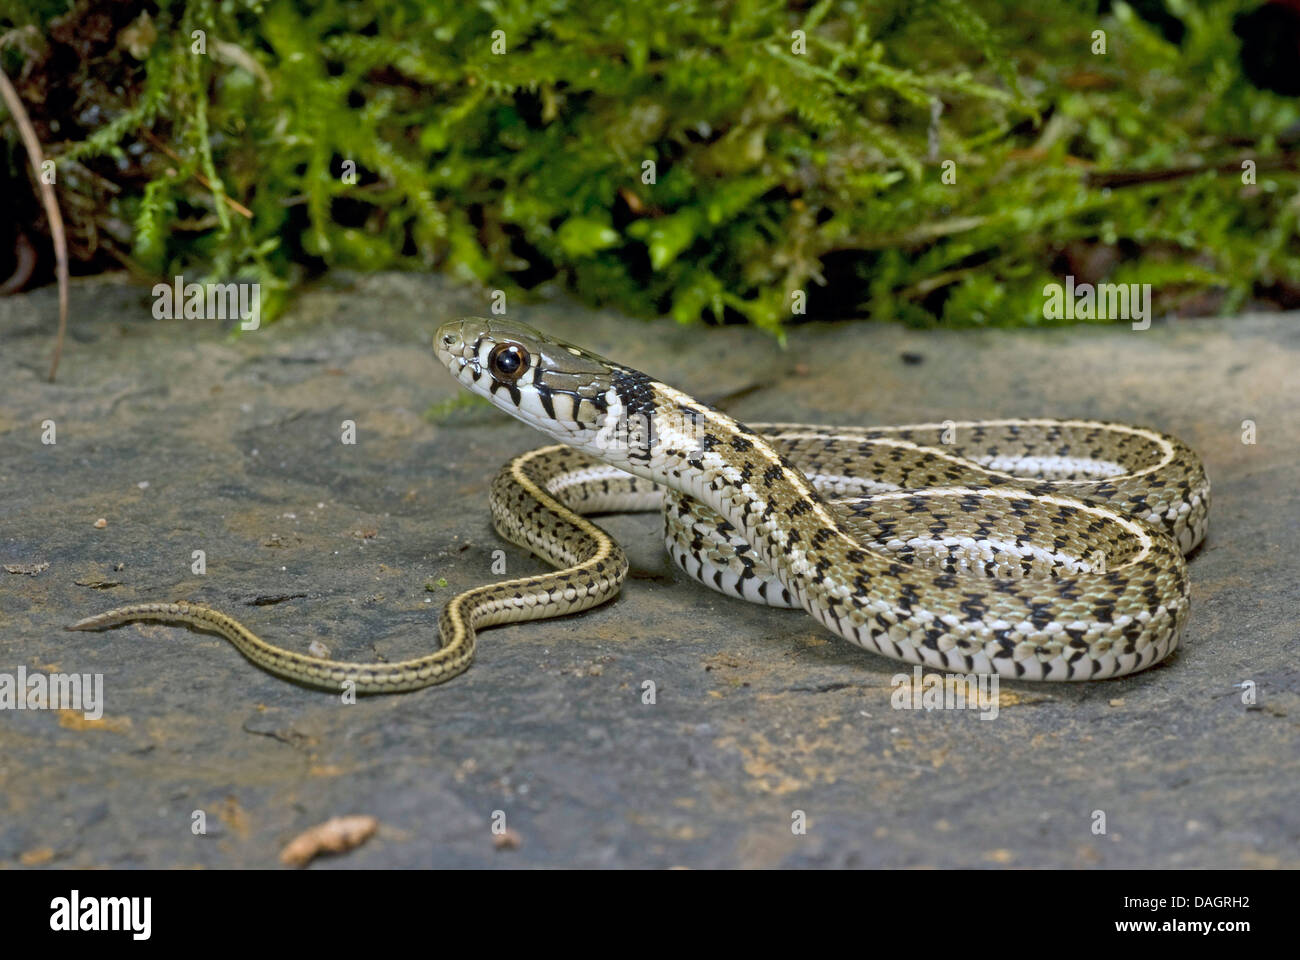 Giarrettiera a scacchi Snake (Thamnophis marcianus), arrotolati Foto Stock